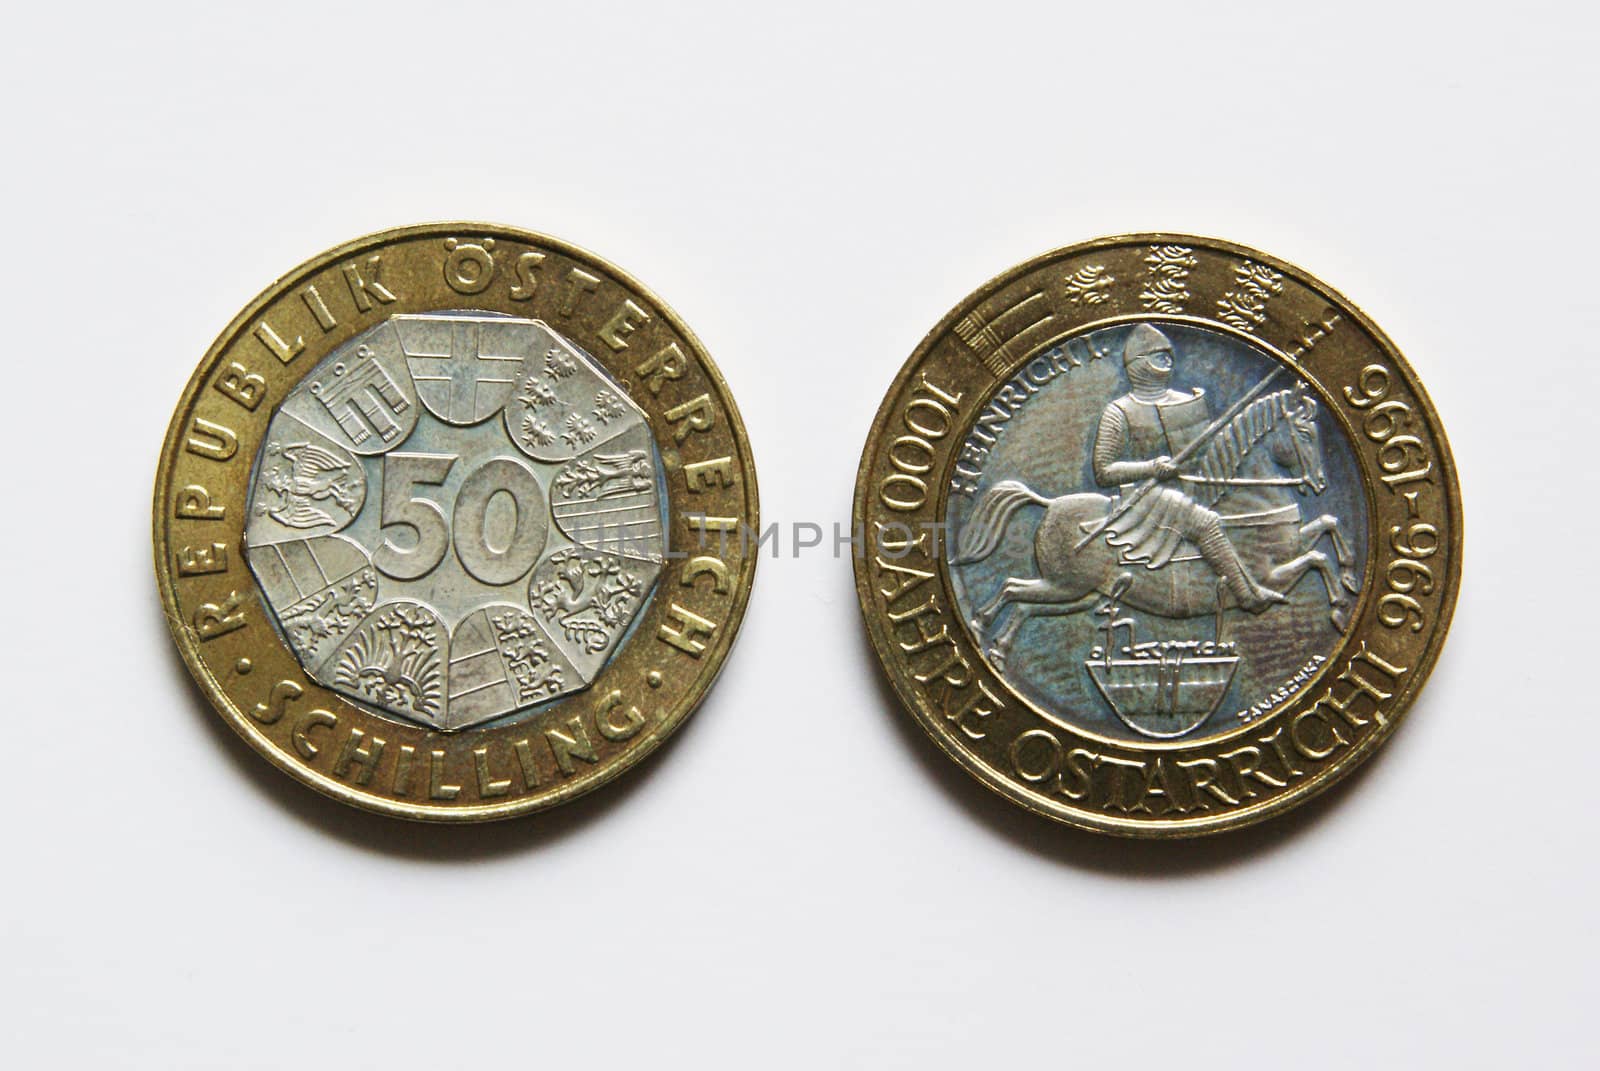 Austrian 50 Schilling Coins by calexica